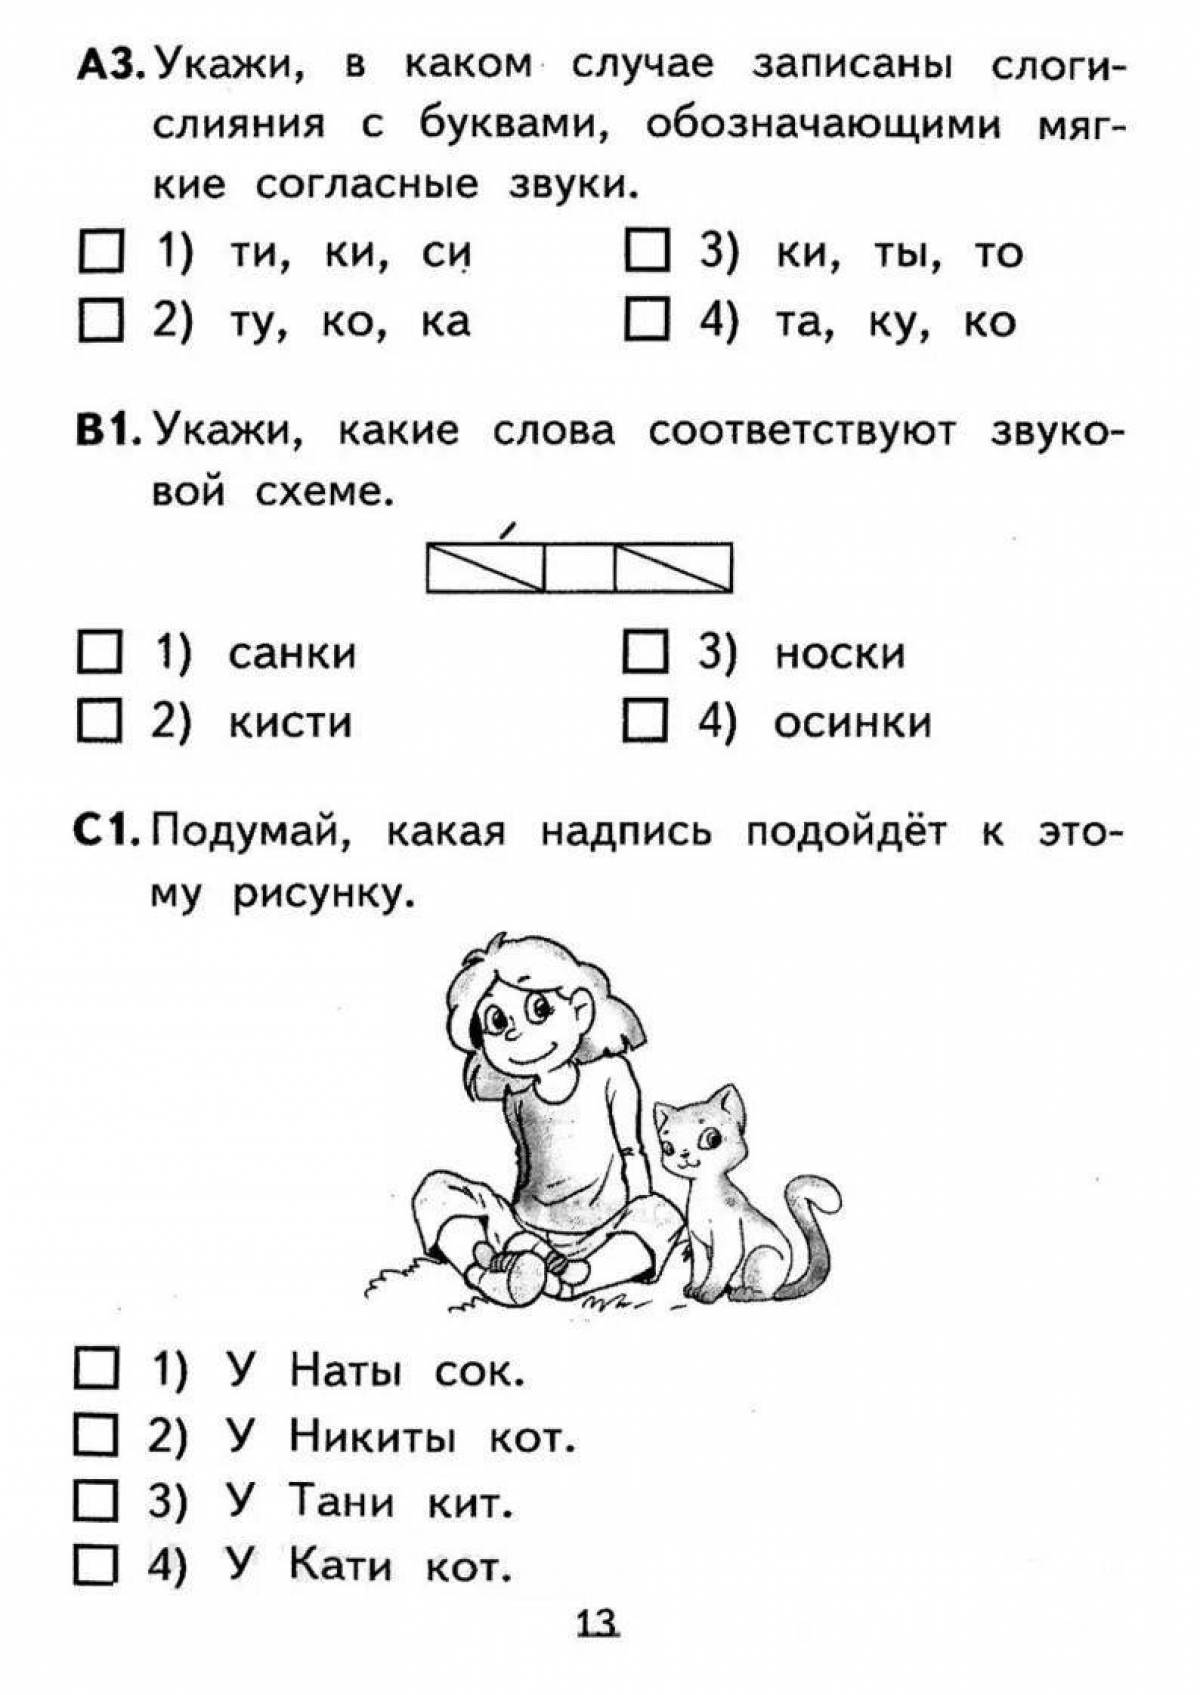 Beautiful 1st grade school of russia coloring book